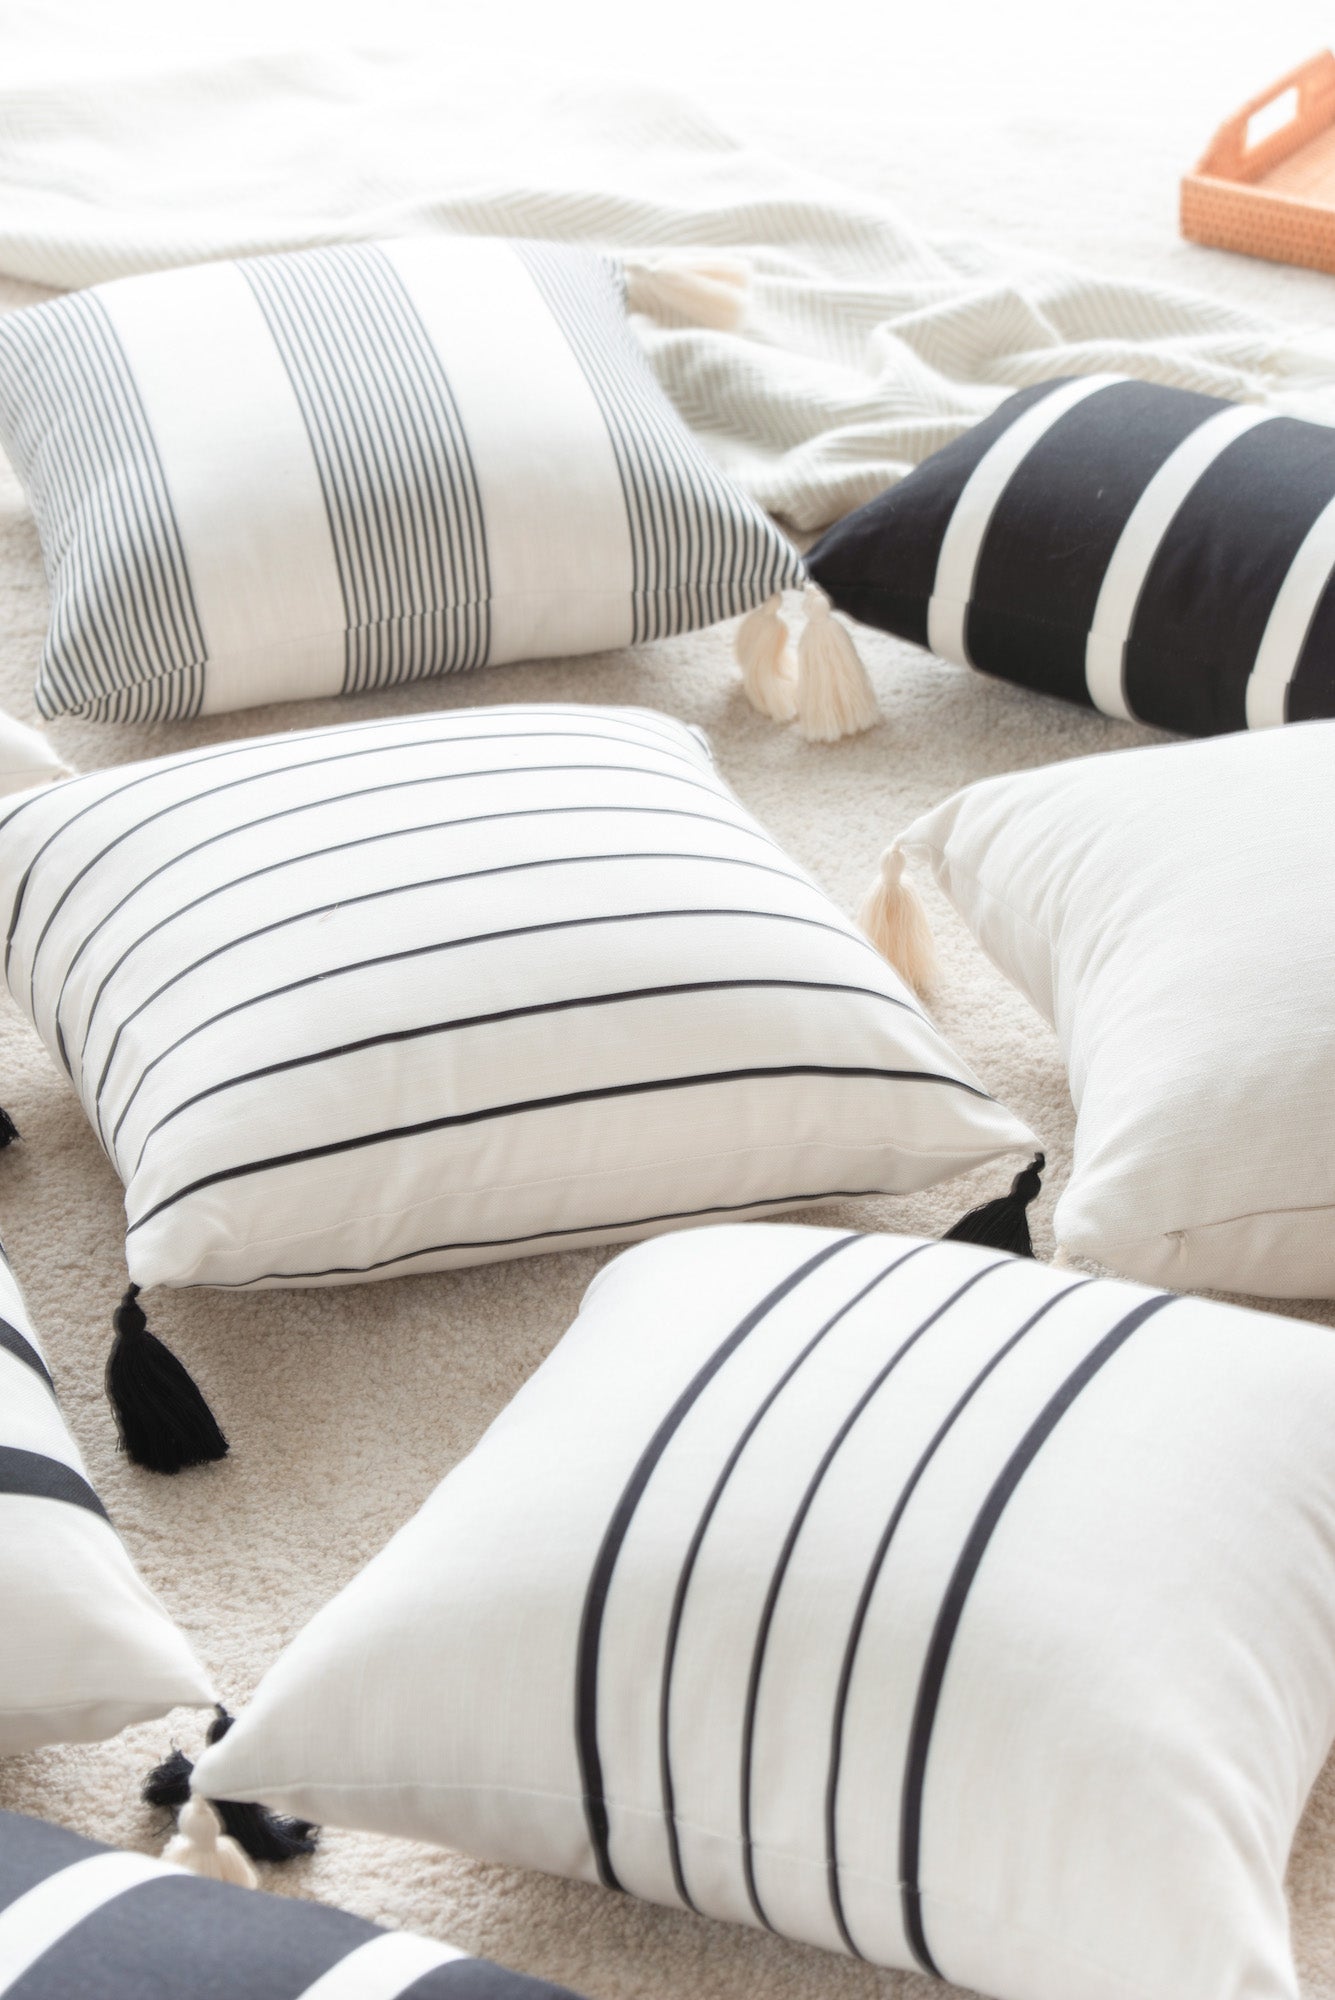 Modern Boho Outdoor Pillow Cover, Striped Tassel, Black, 18"x18"